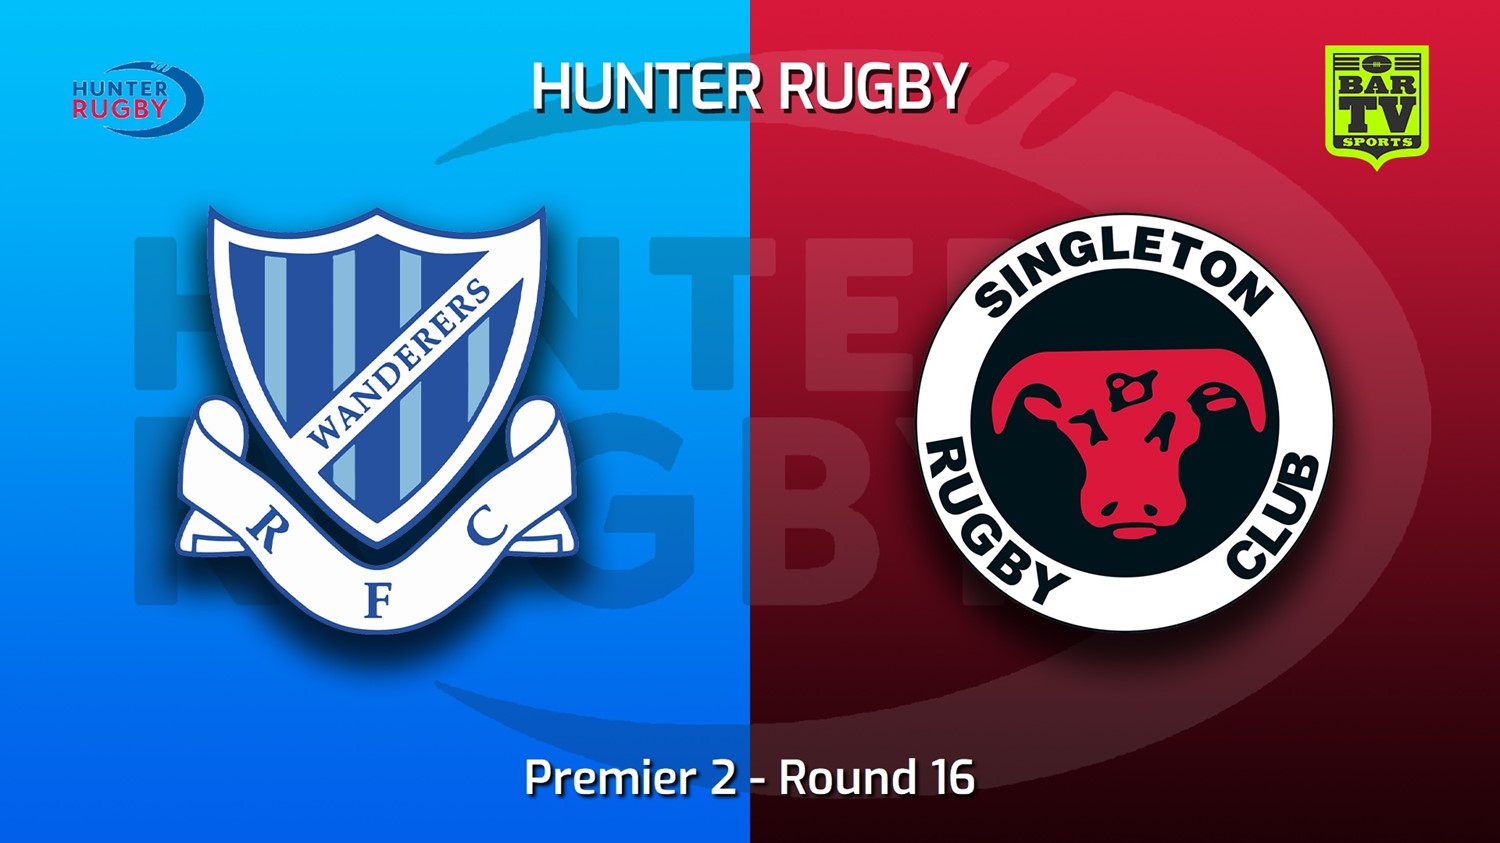 220813-Hunter Rugby Round 16 - Premier 2 - Wanderers v Singleton Bulls Minigame Slate Image